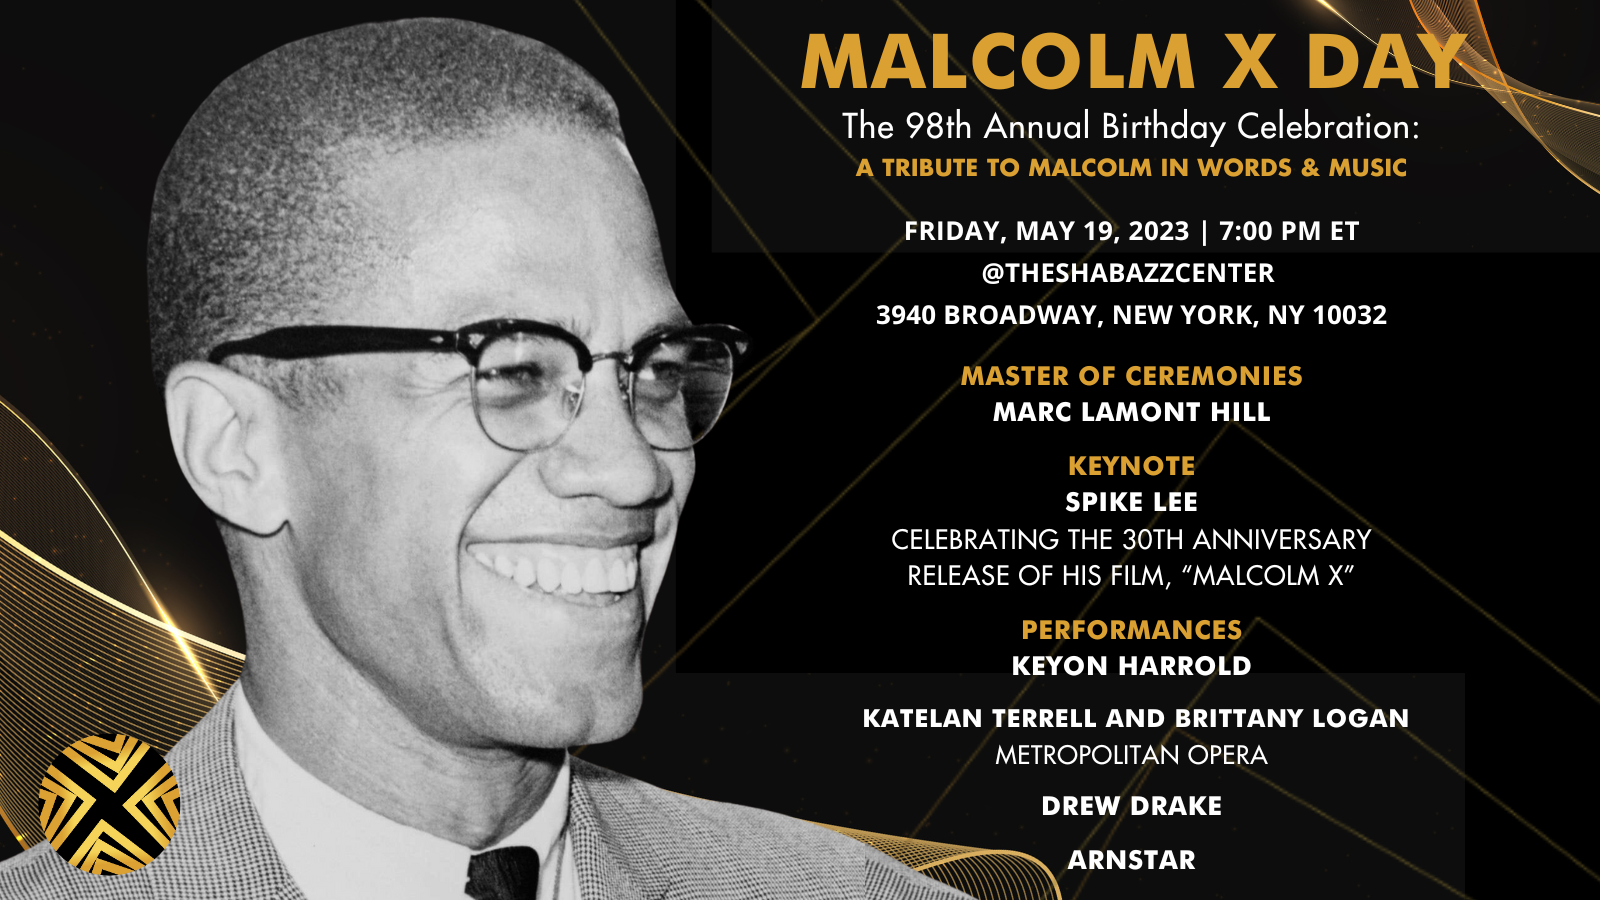 Malcolm X Day 2023